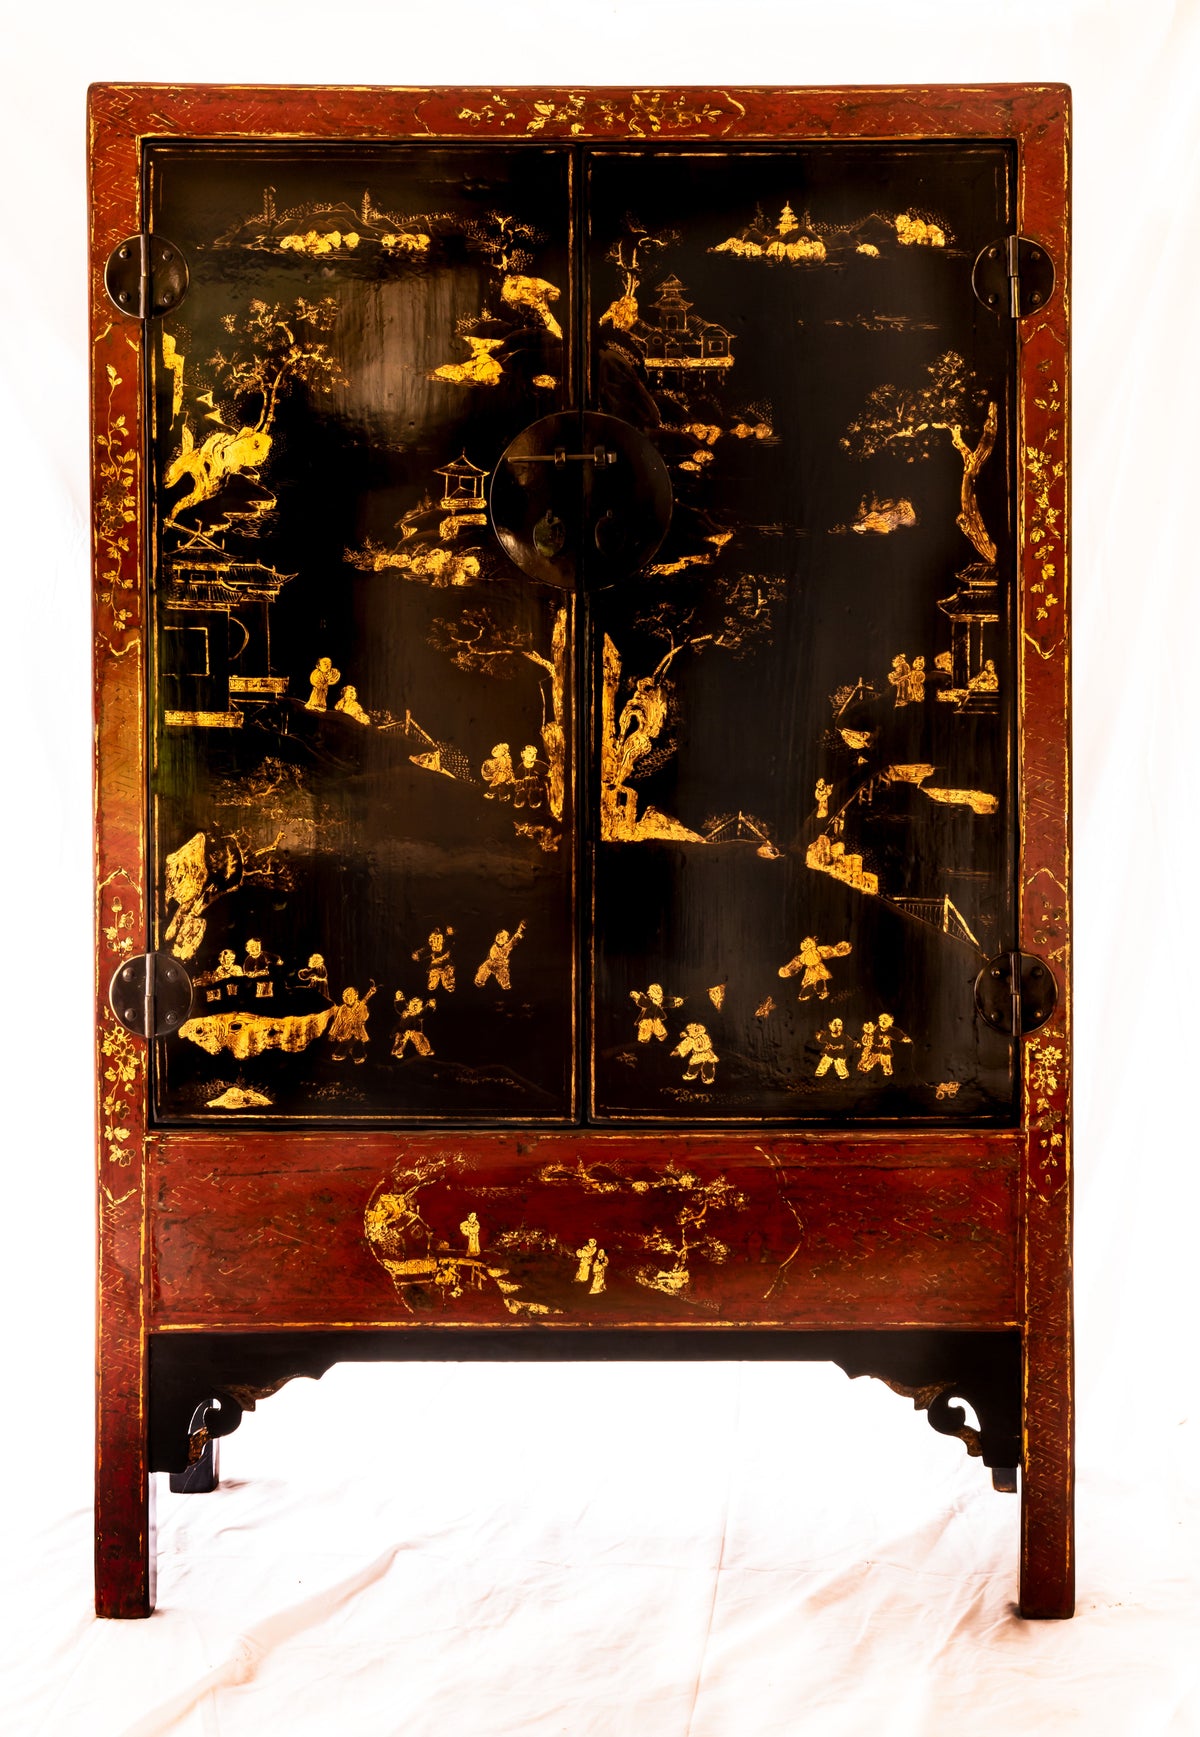 18th century hand-painted wardrobe